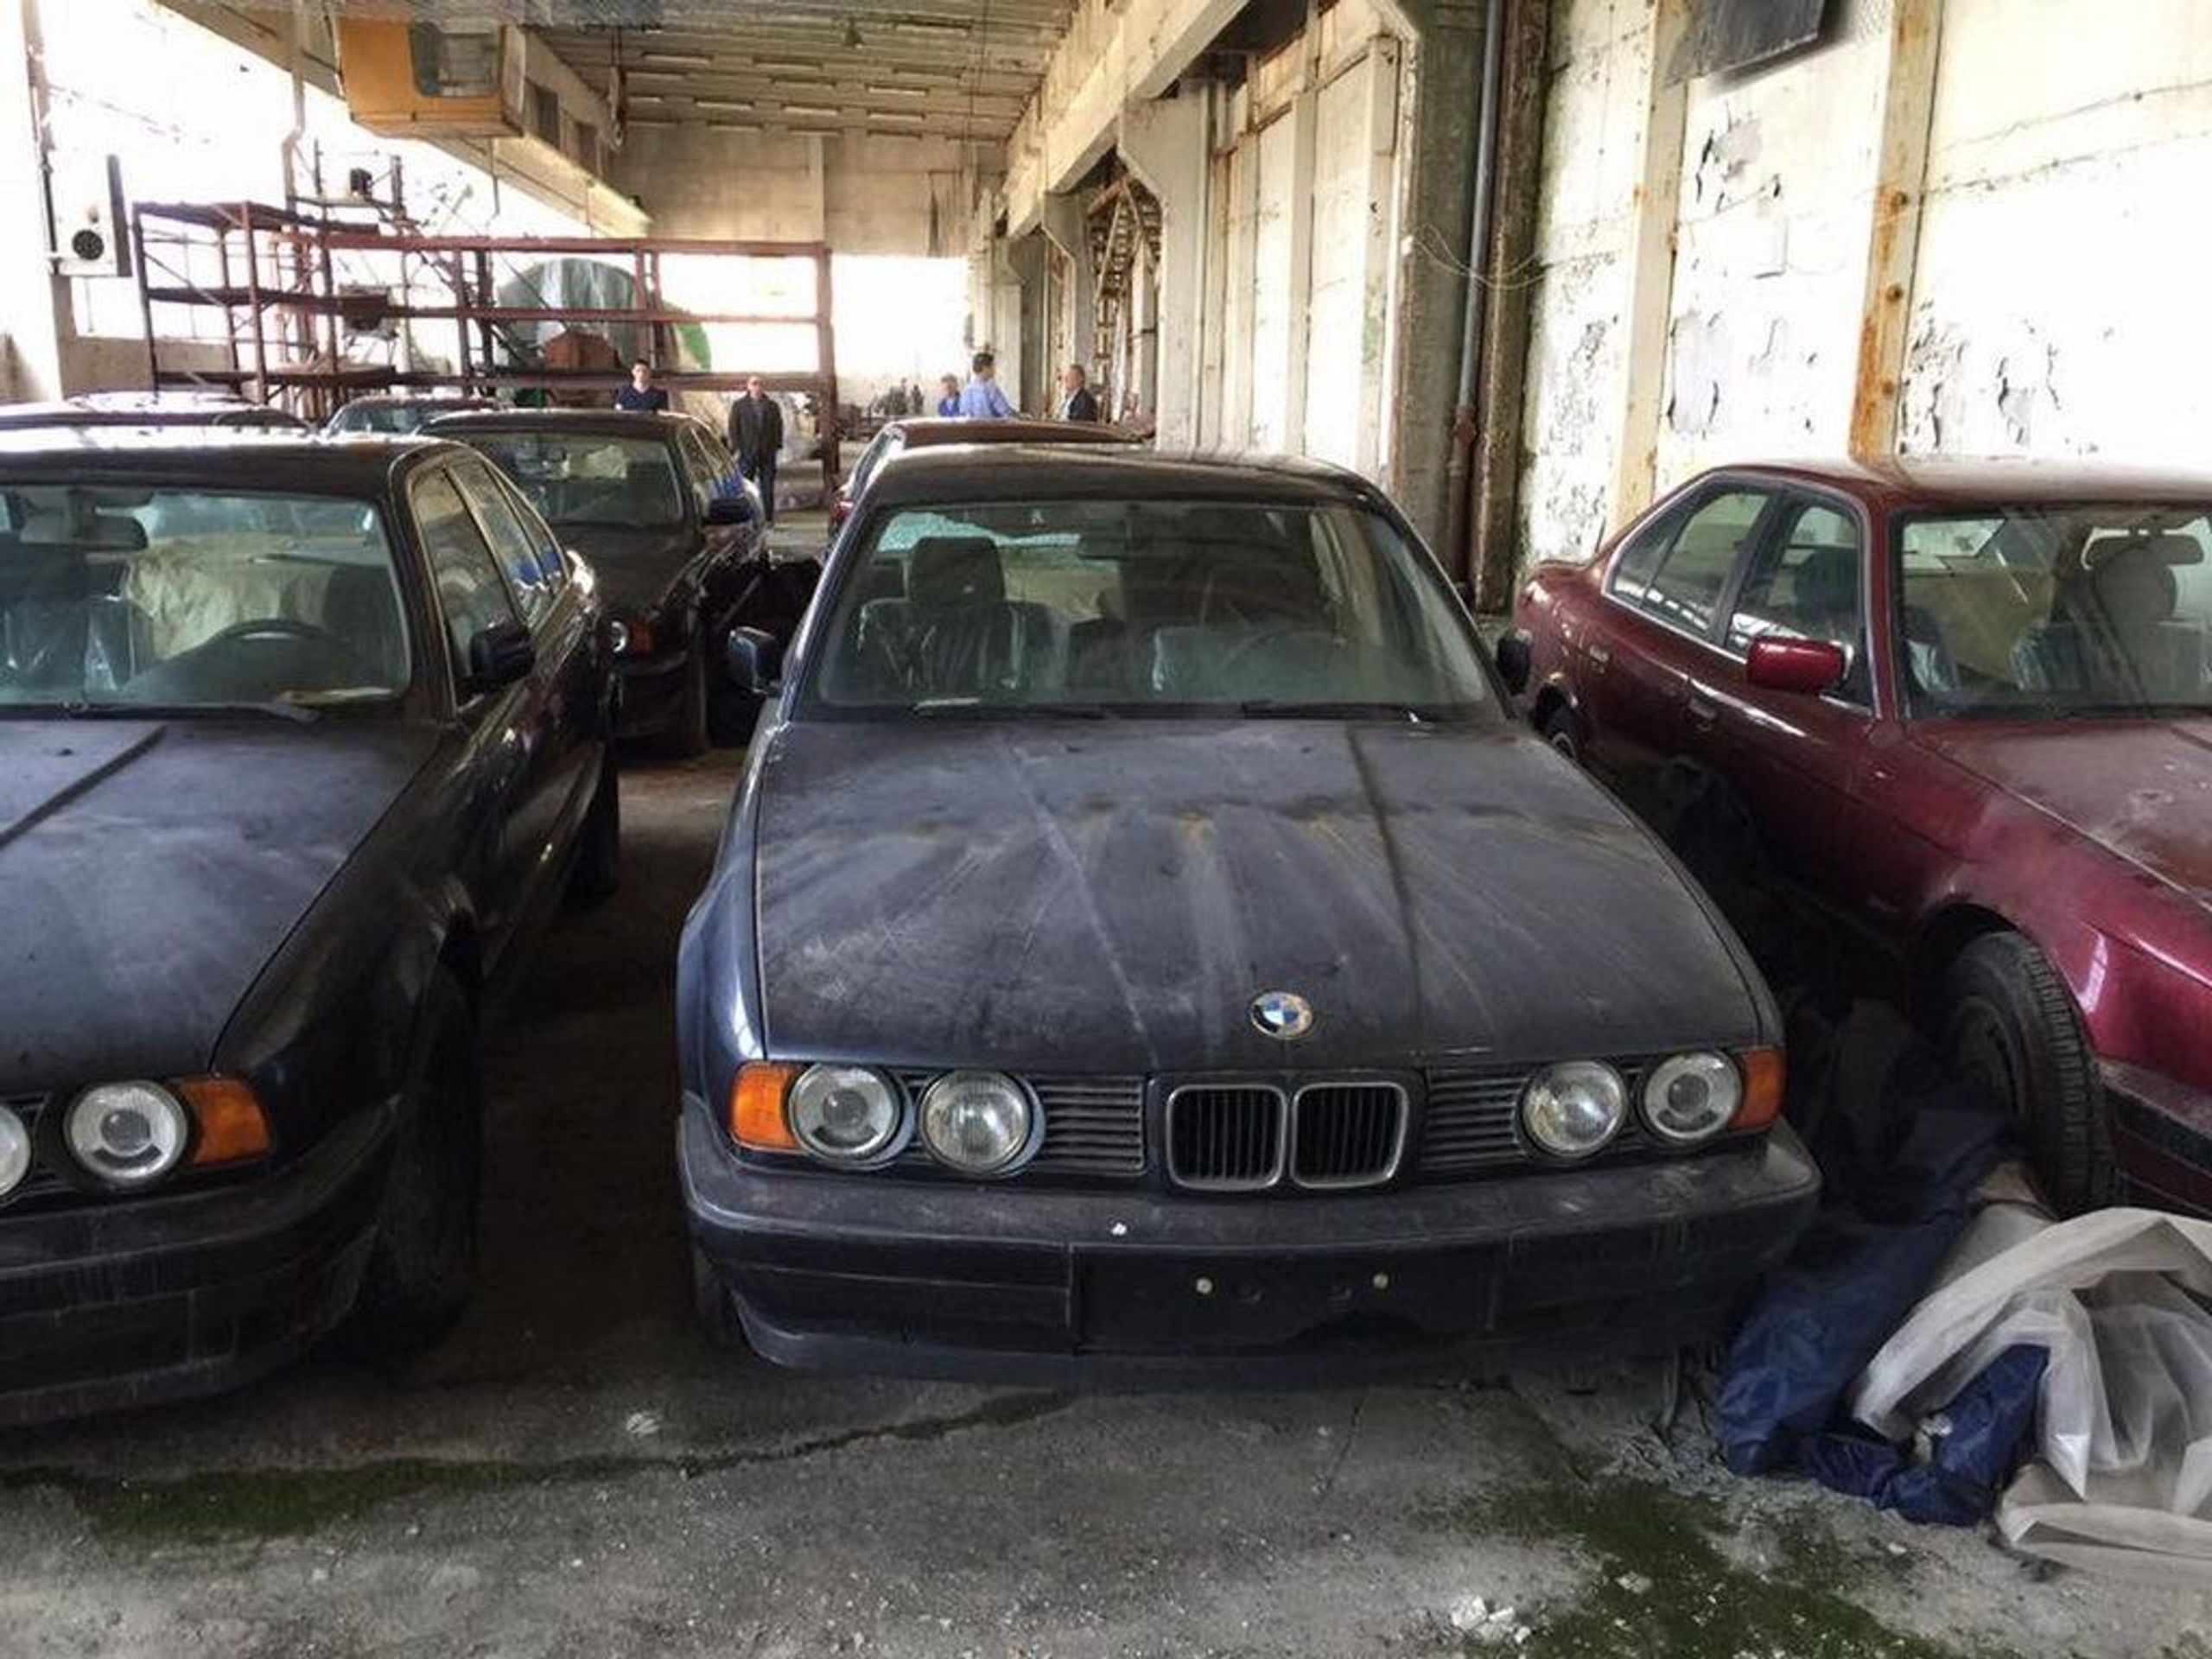 Sklad 25 let ukrýval 11 vozů BMW řady 5 - 20 - Fotogalerie: V bulharském skladu se 25 let skrýval poklad (15/16)